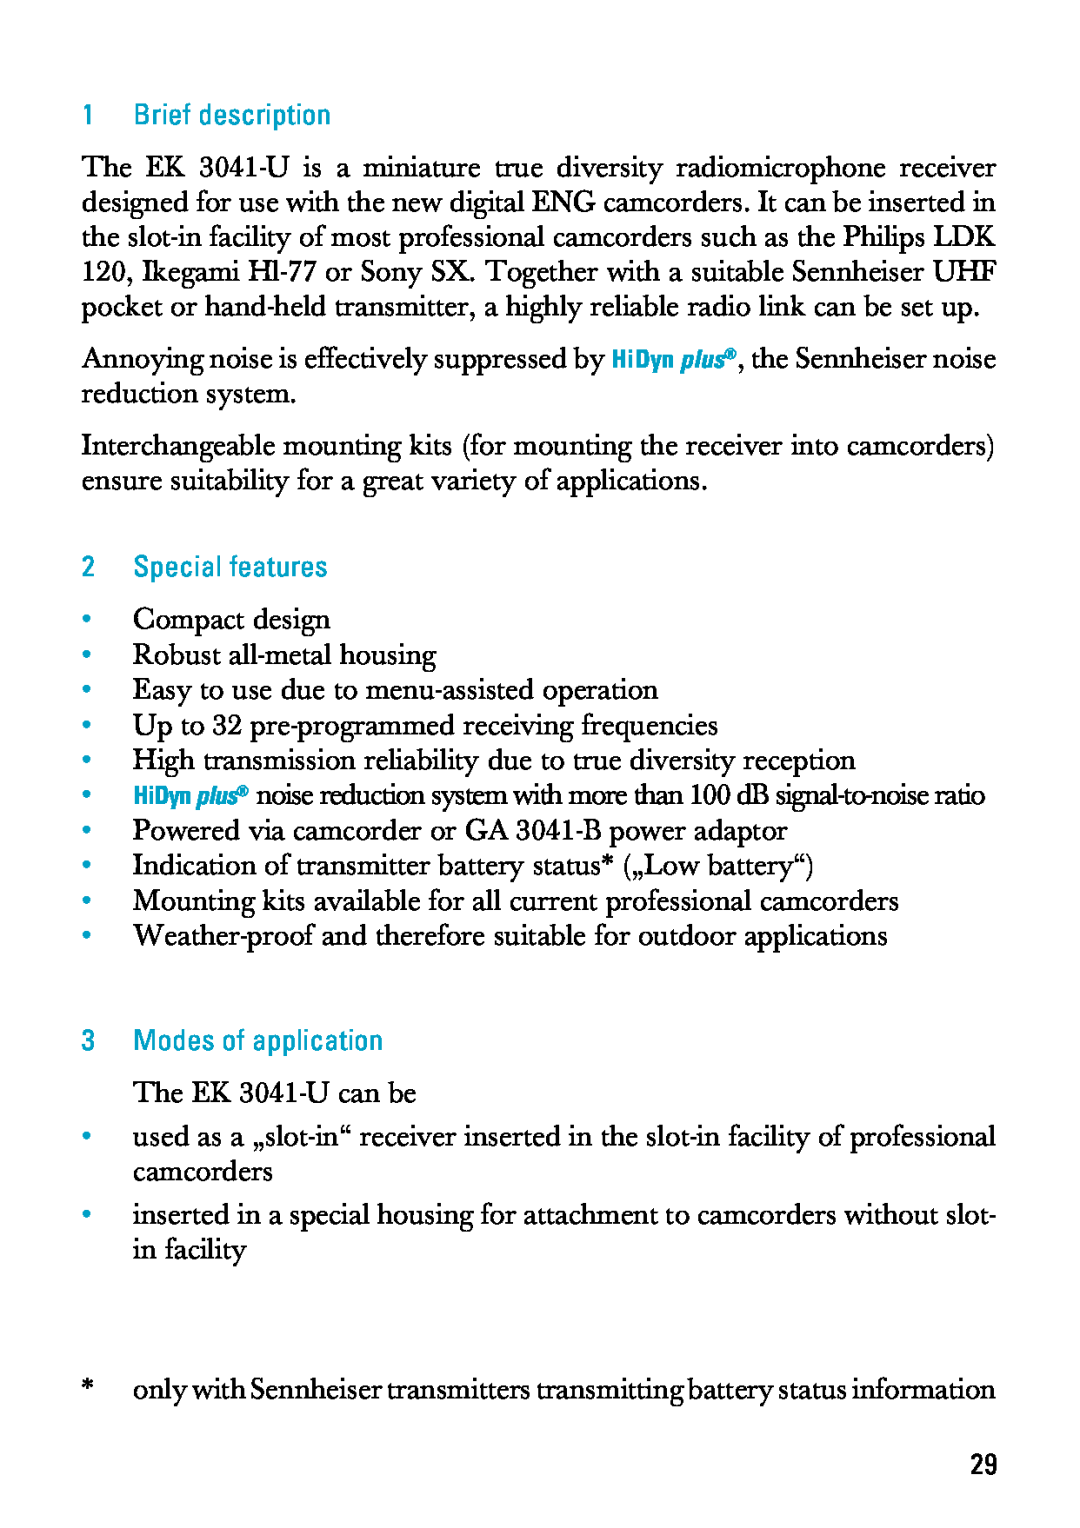 Sennheiser EK 3041-U manual Brief description, Special features, Modes of application 